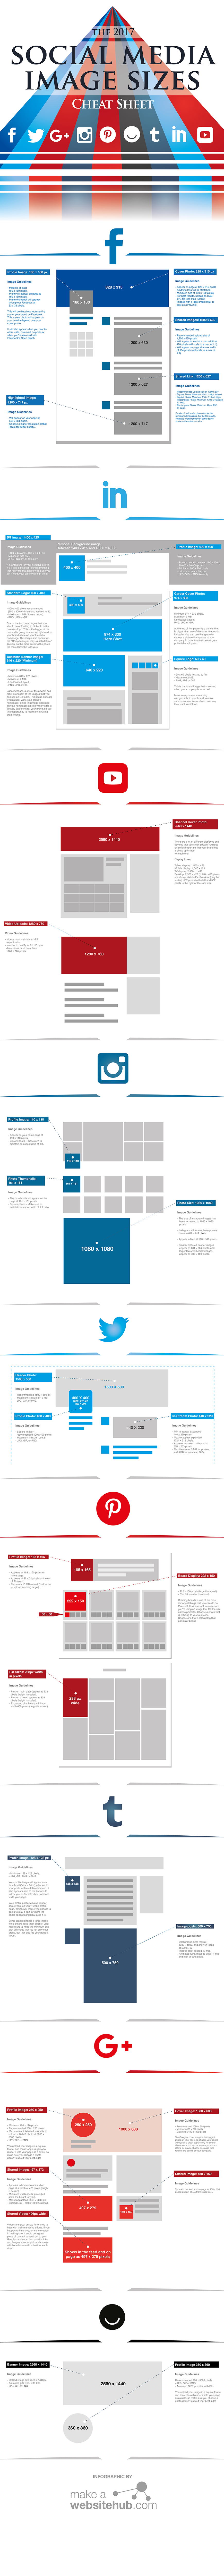 makeawebsitehub infographic - social media image sizes cheatsheet